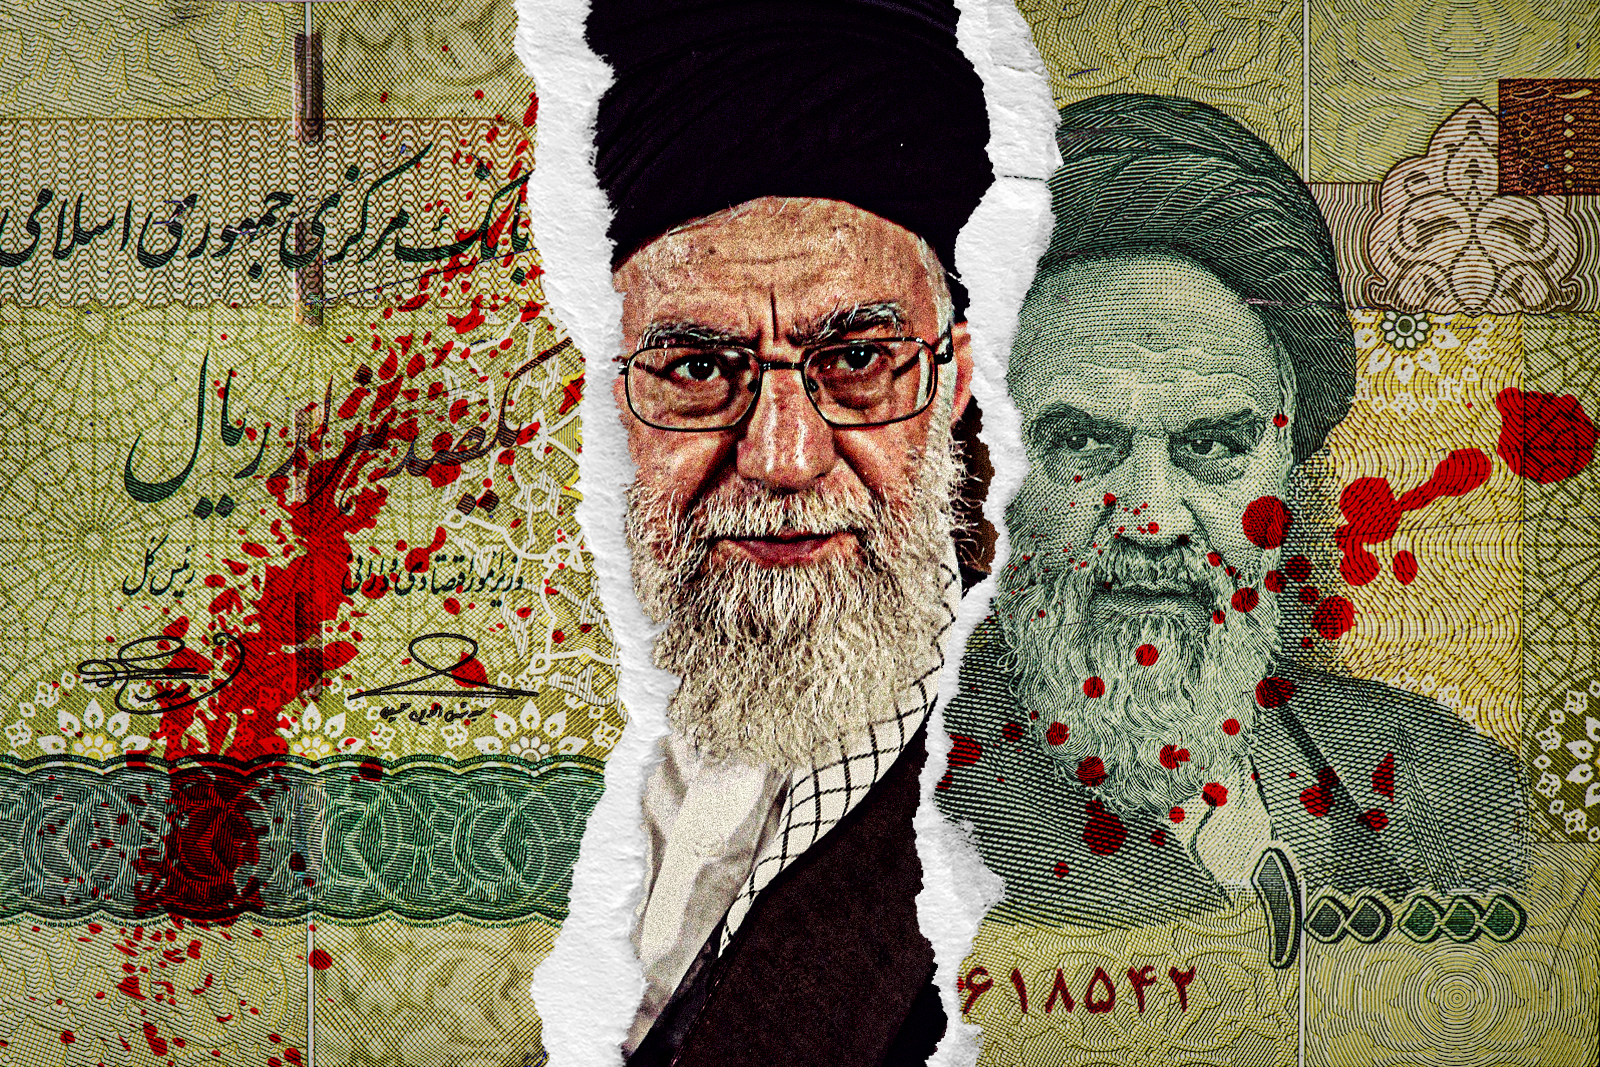 Supreme Leader Ali Khamenei